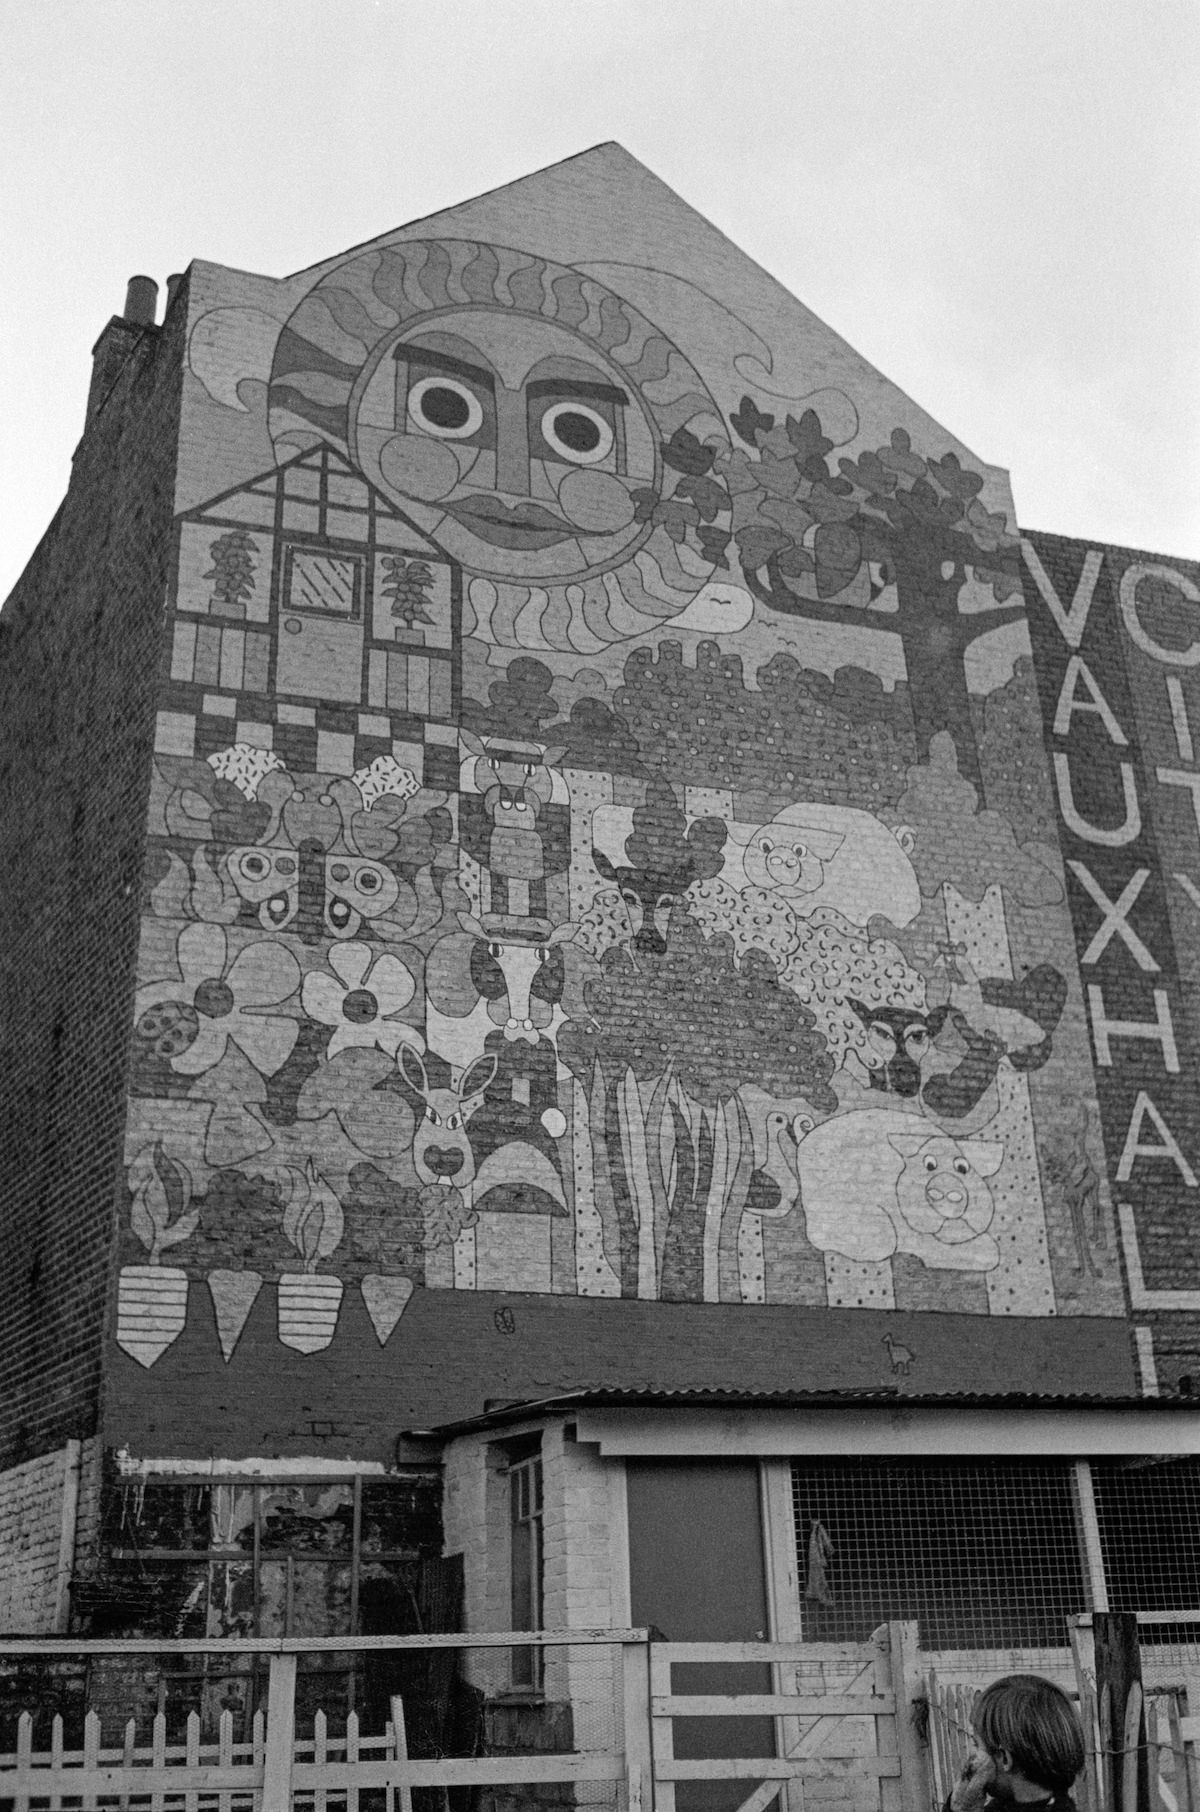 Mural, Vauxhall City Farm, Vauxhall, Lambeth. 1980